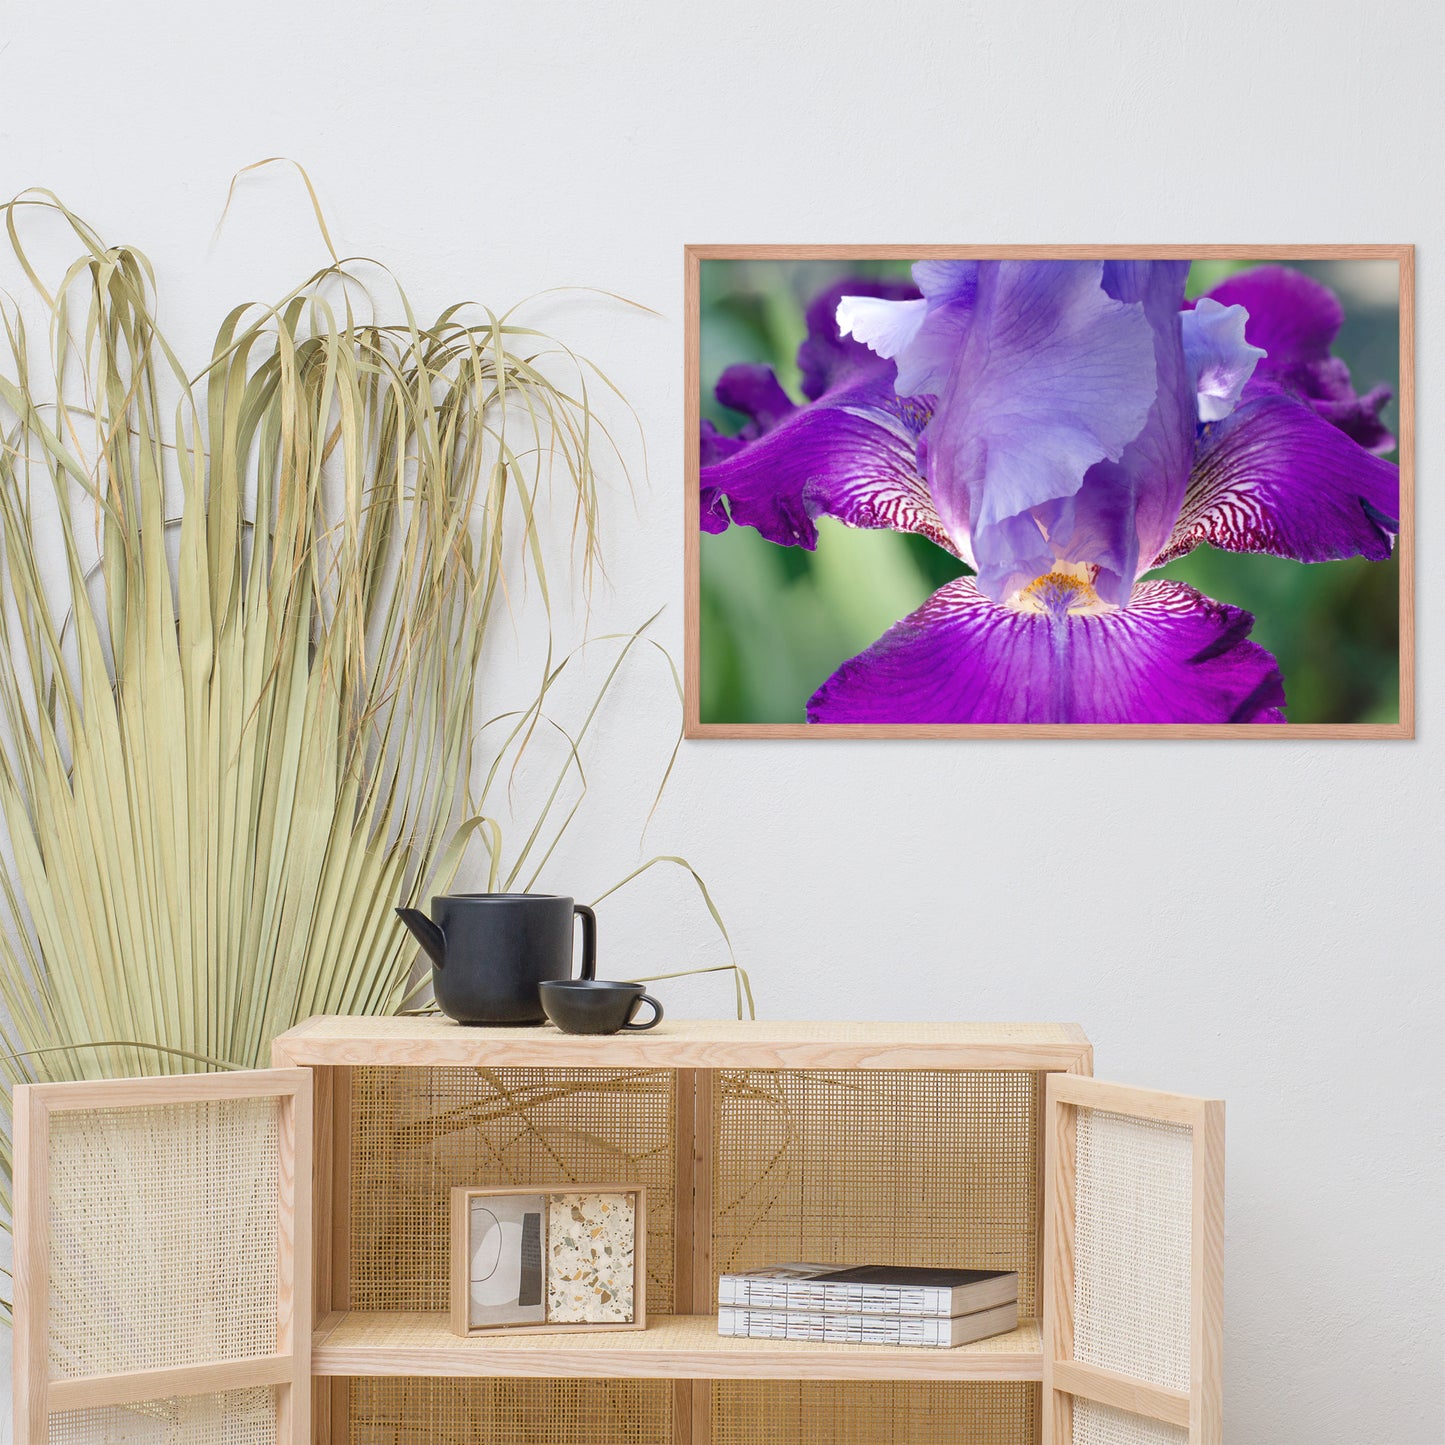 Wall Decor For Bedroom Amazon: Glowing Iris - Floral / Botanical / Nature Photo Framed Wall Art Print - Artwork - Wall Decor - Modern Home Decor